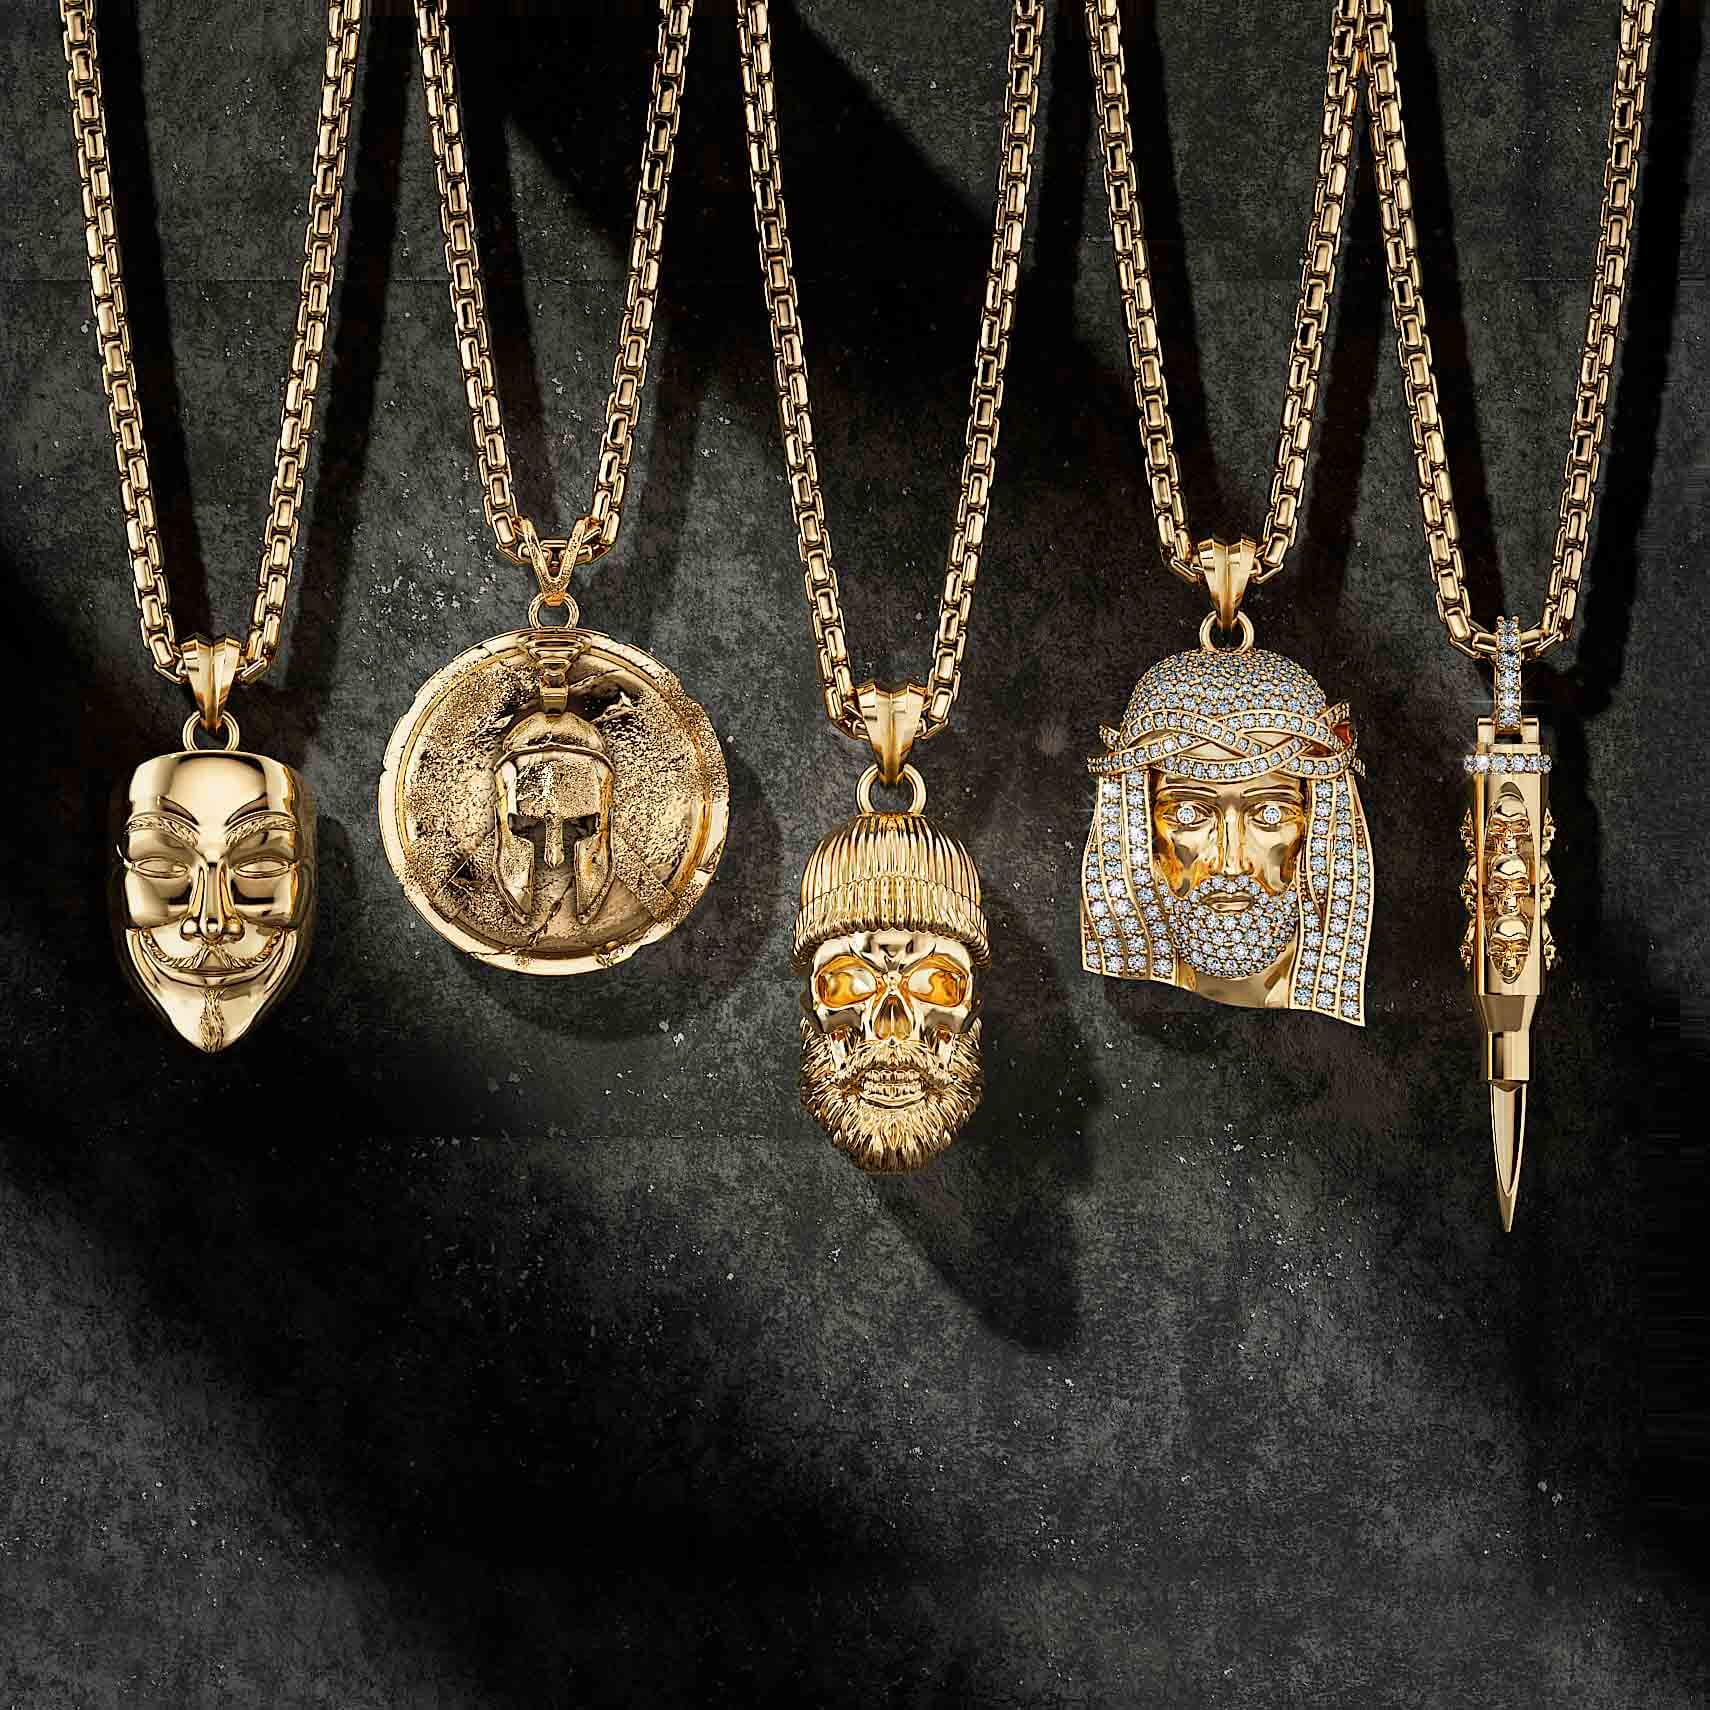 Amazon.com: big gold nugget pendant, mens gold nugget necklace, real gold  nugget pendant, Alaska gold nugget necklace, gold rush pendant gift for him  : Handmade Products